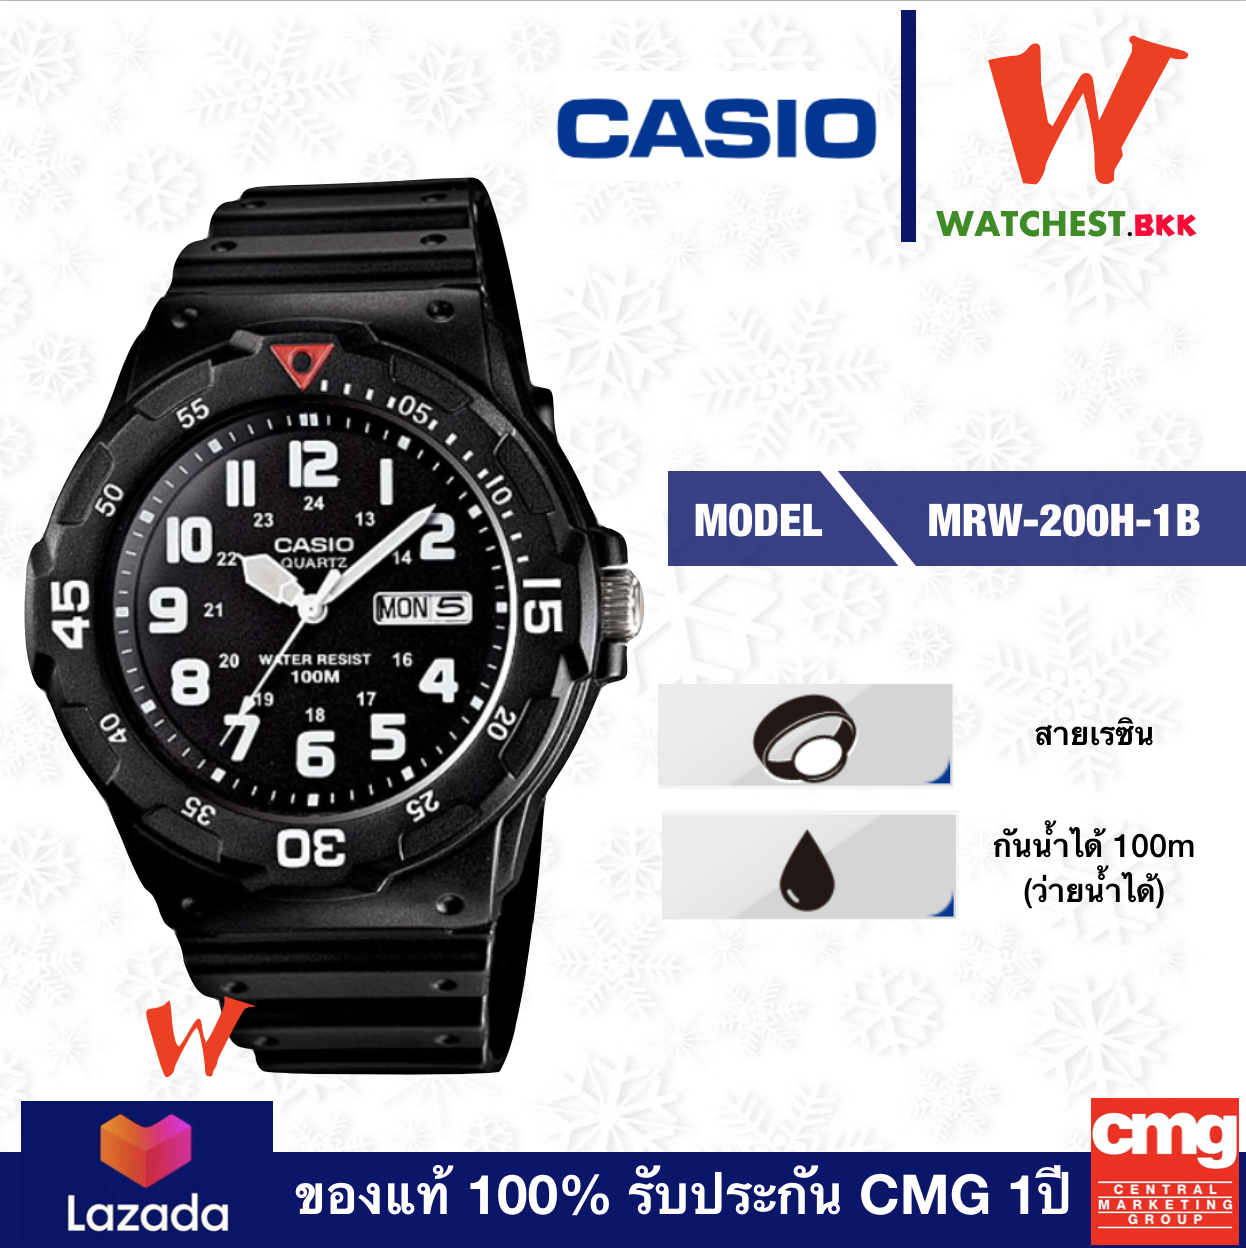 casio นาฬิกาข้อสายยาง กันน้ำ100m รุ่น MRW-200H-1B คาสิโอ้ MRW200H สายเรซิ่น ตัวล็อกแบบสายสอด (watchestbkk คาสิโอ แท้ ของแท้100% ประกัน CMG)